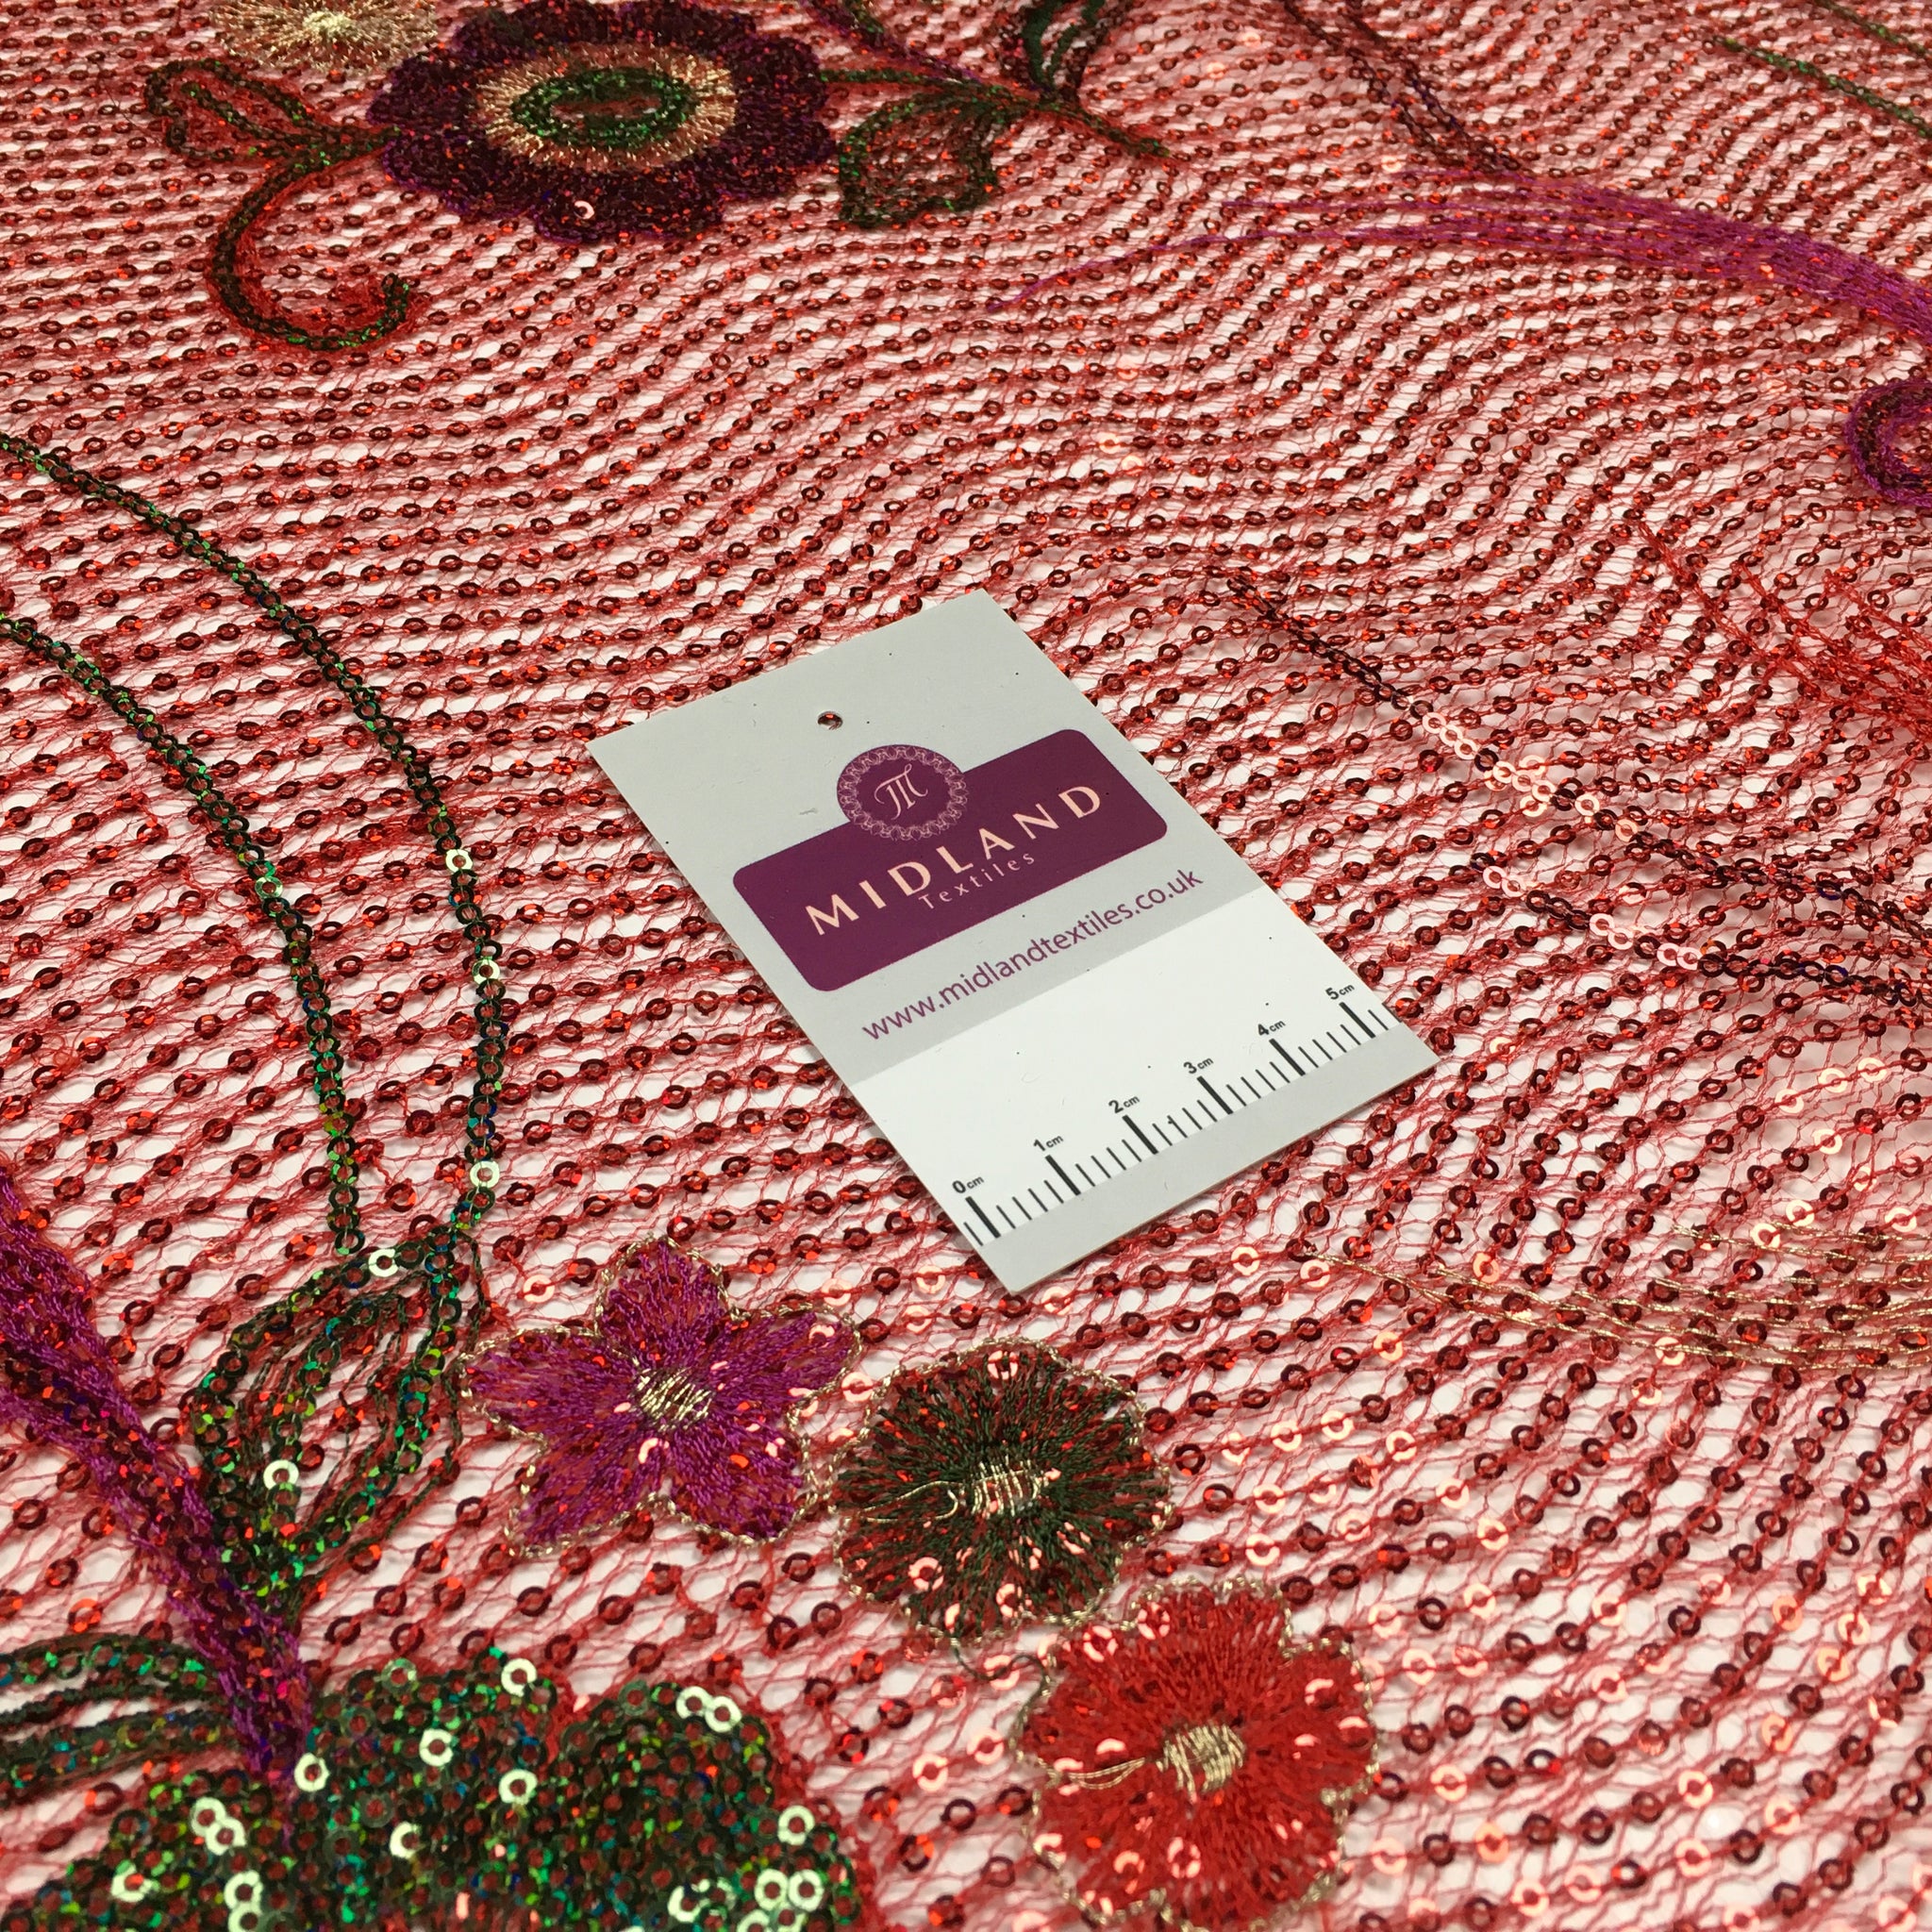 Floral sequin net mesh wedding dress Fabric 127 cm M1384 Mtex